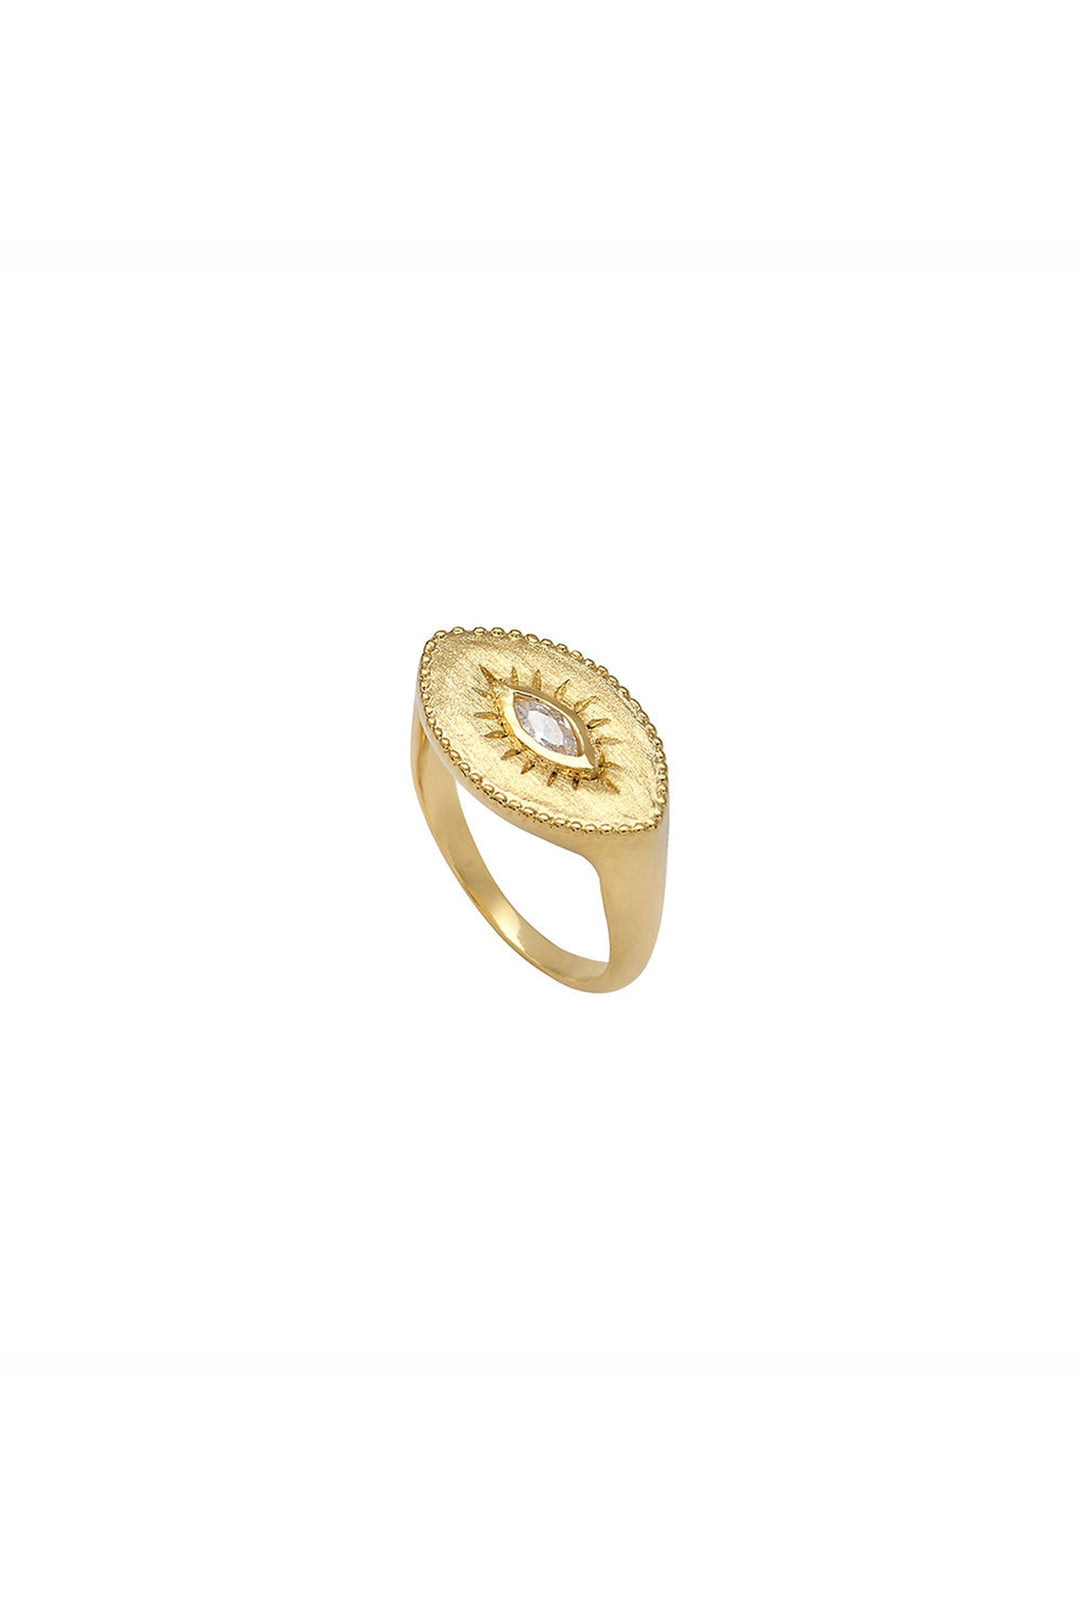 Louise Hendricks Pillar Ring - Gold